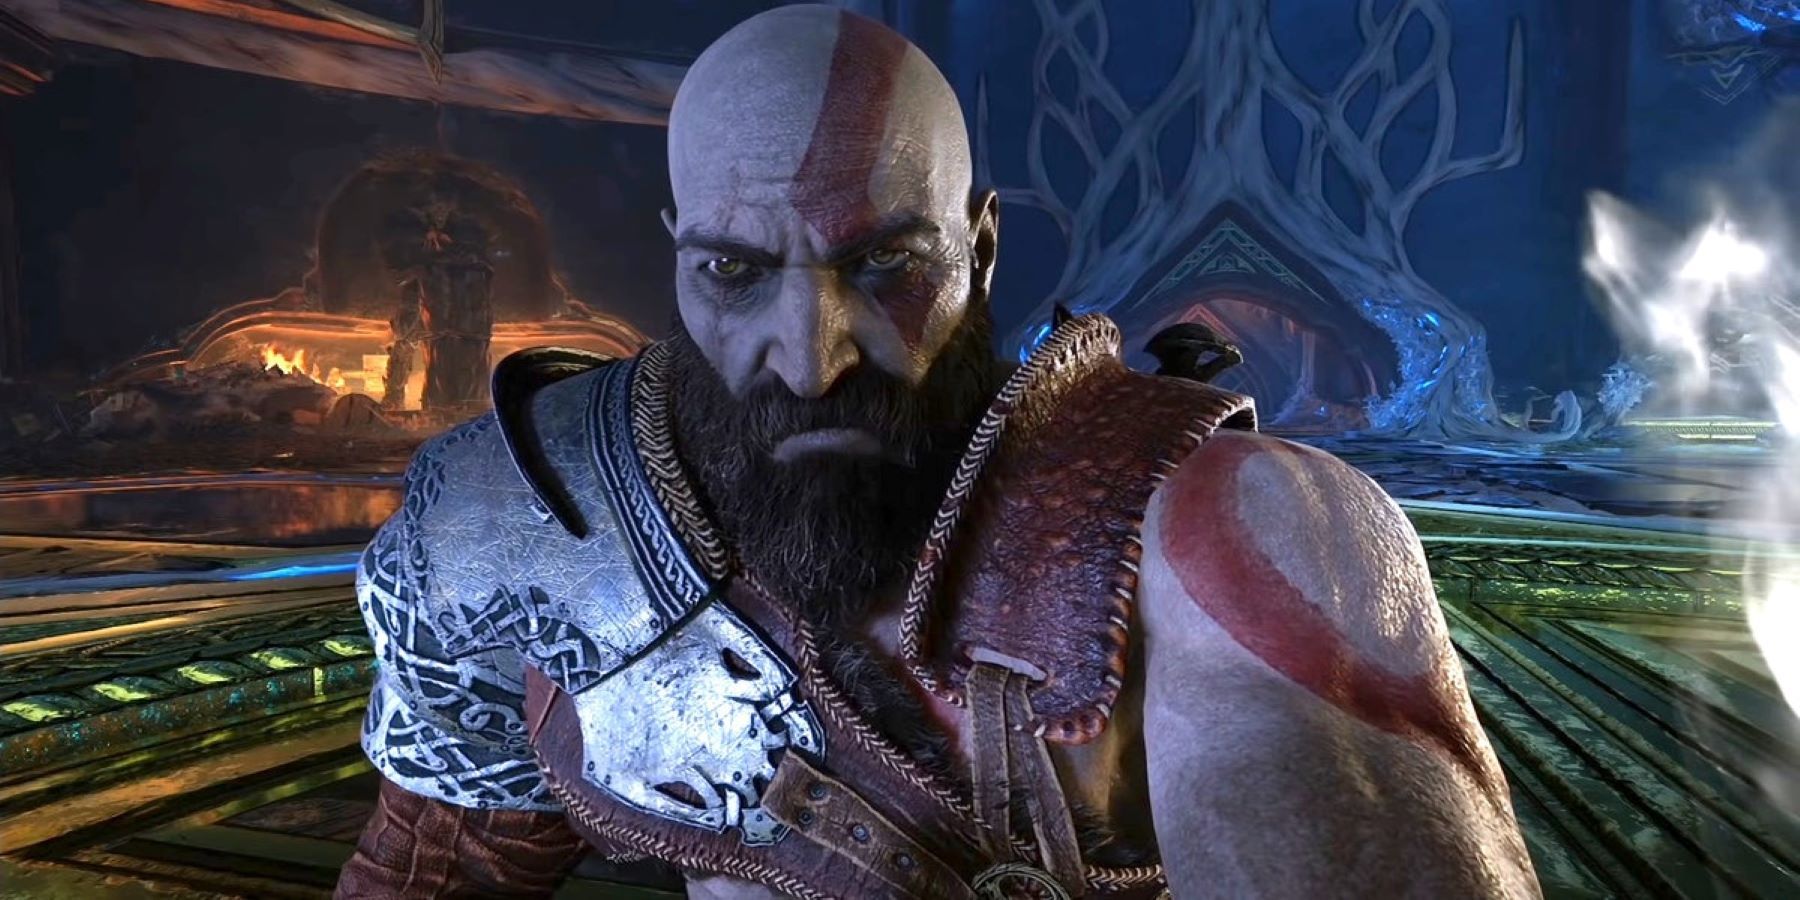 God Of War PC Mod Brings Back Kratos' Classic Look - PlayStation